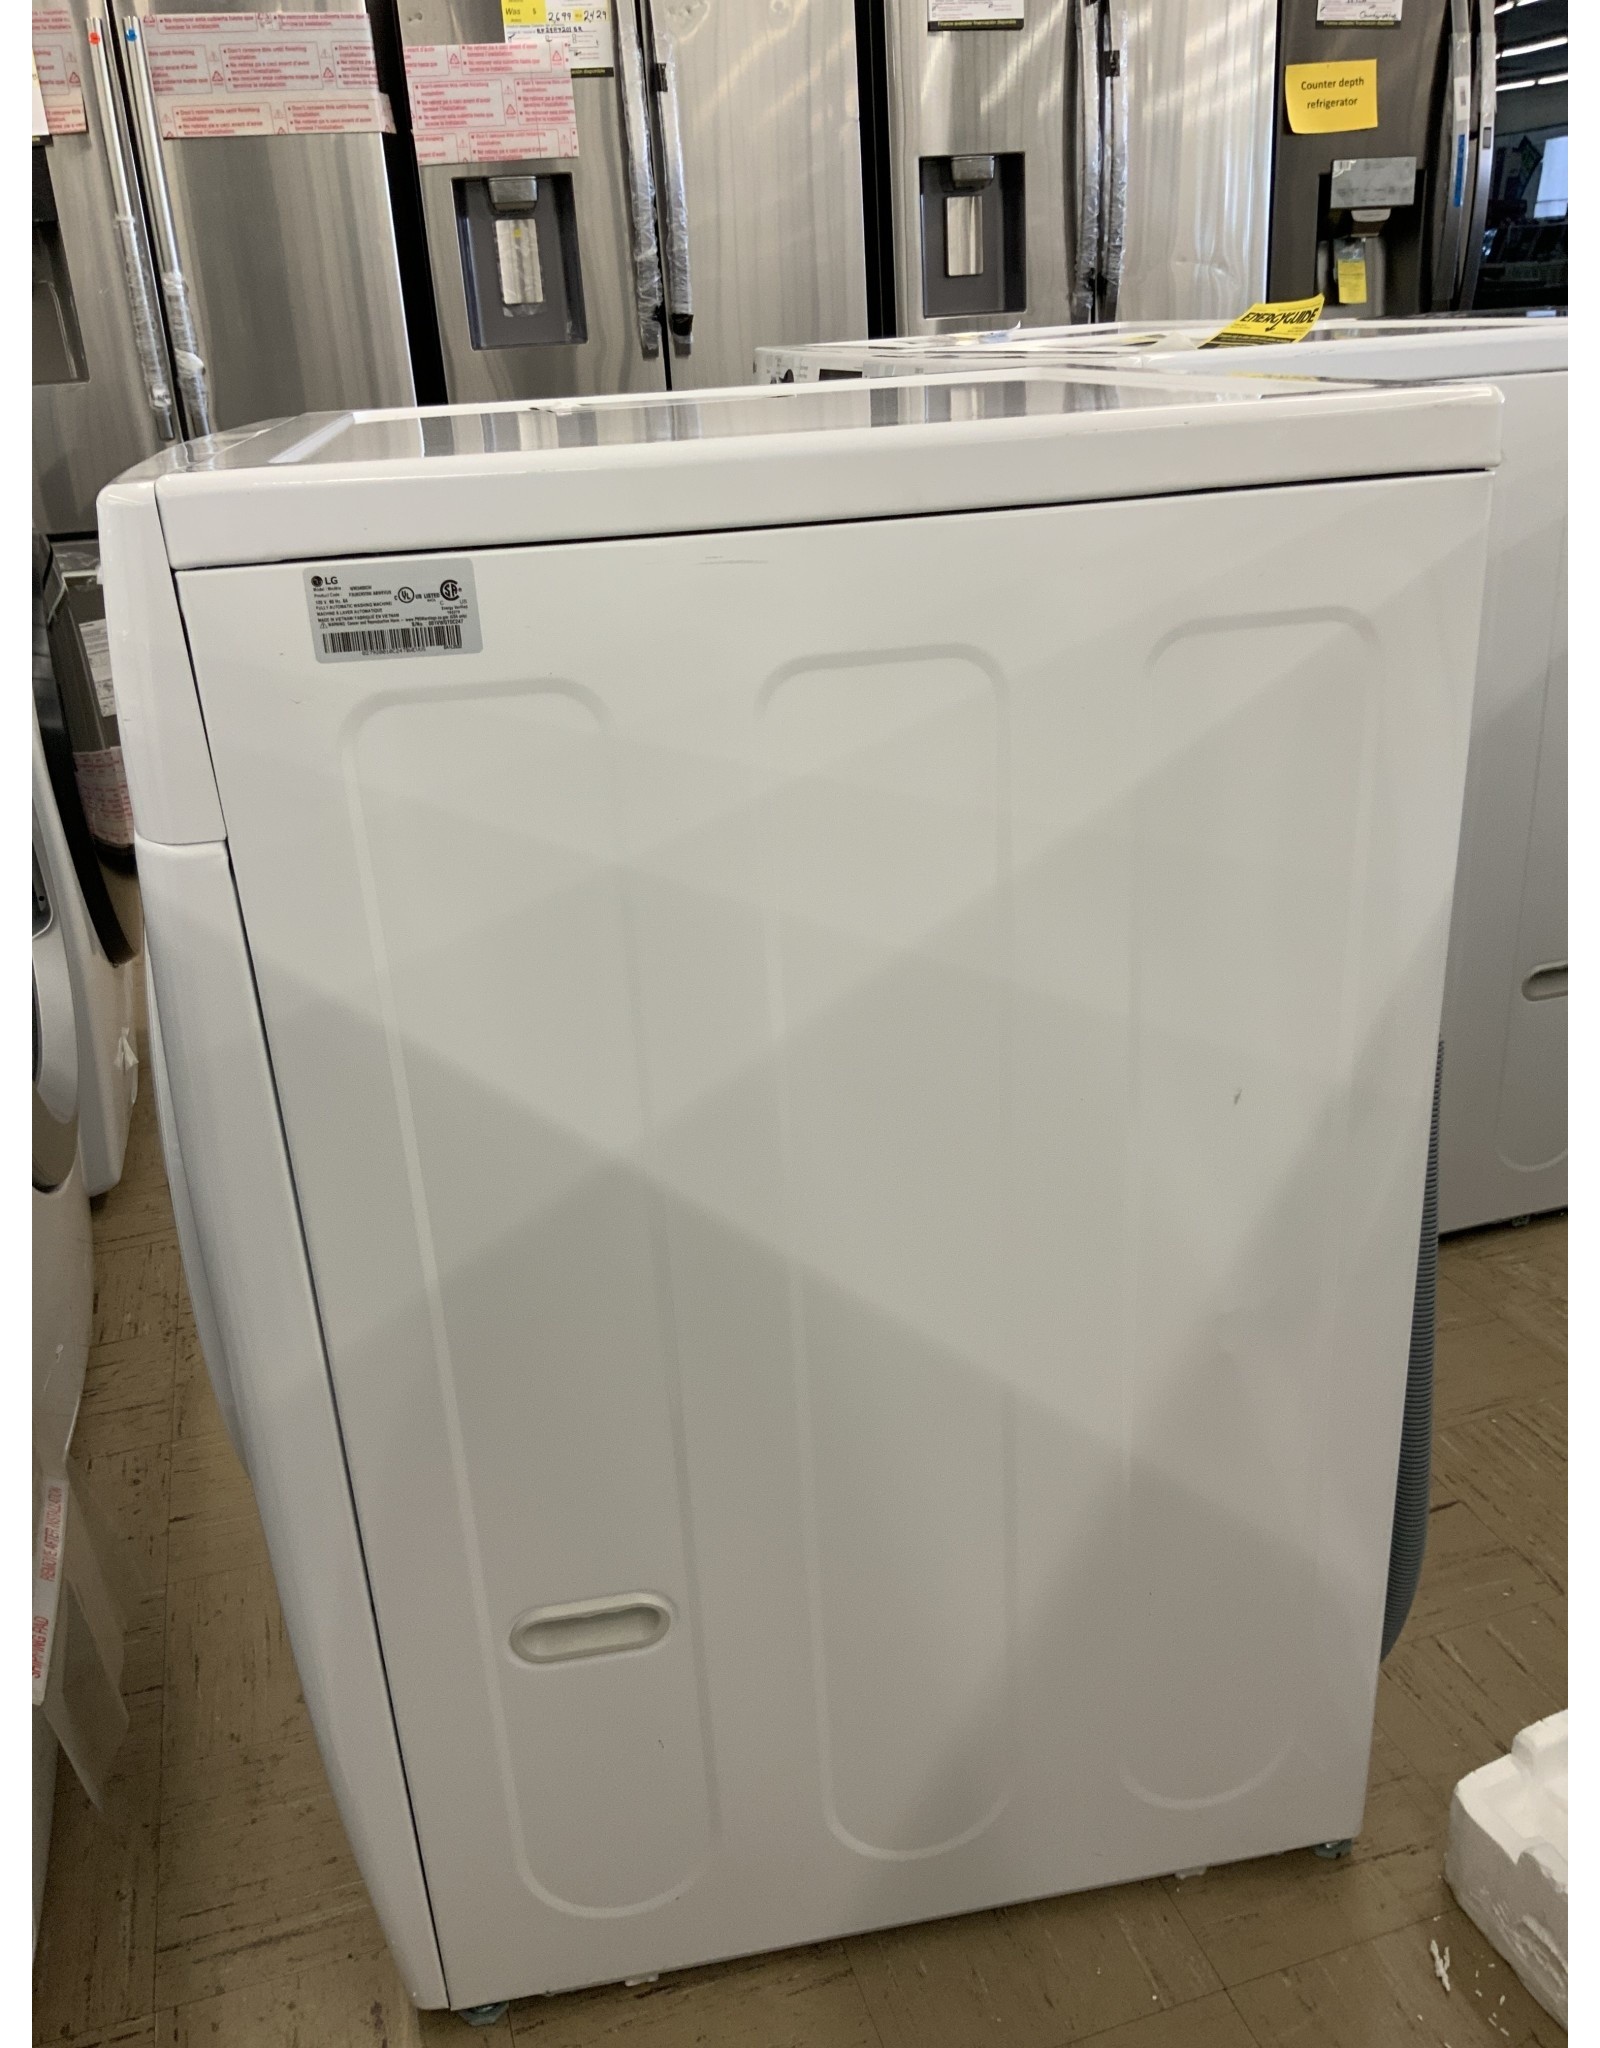 LG Electronics WM3400CW 4.5 cu. ft. Ultra Large Capacity White Front Load Washing Machine with Coldwash Technology